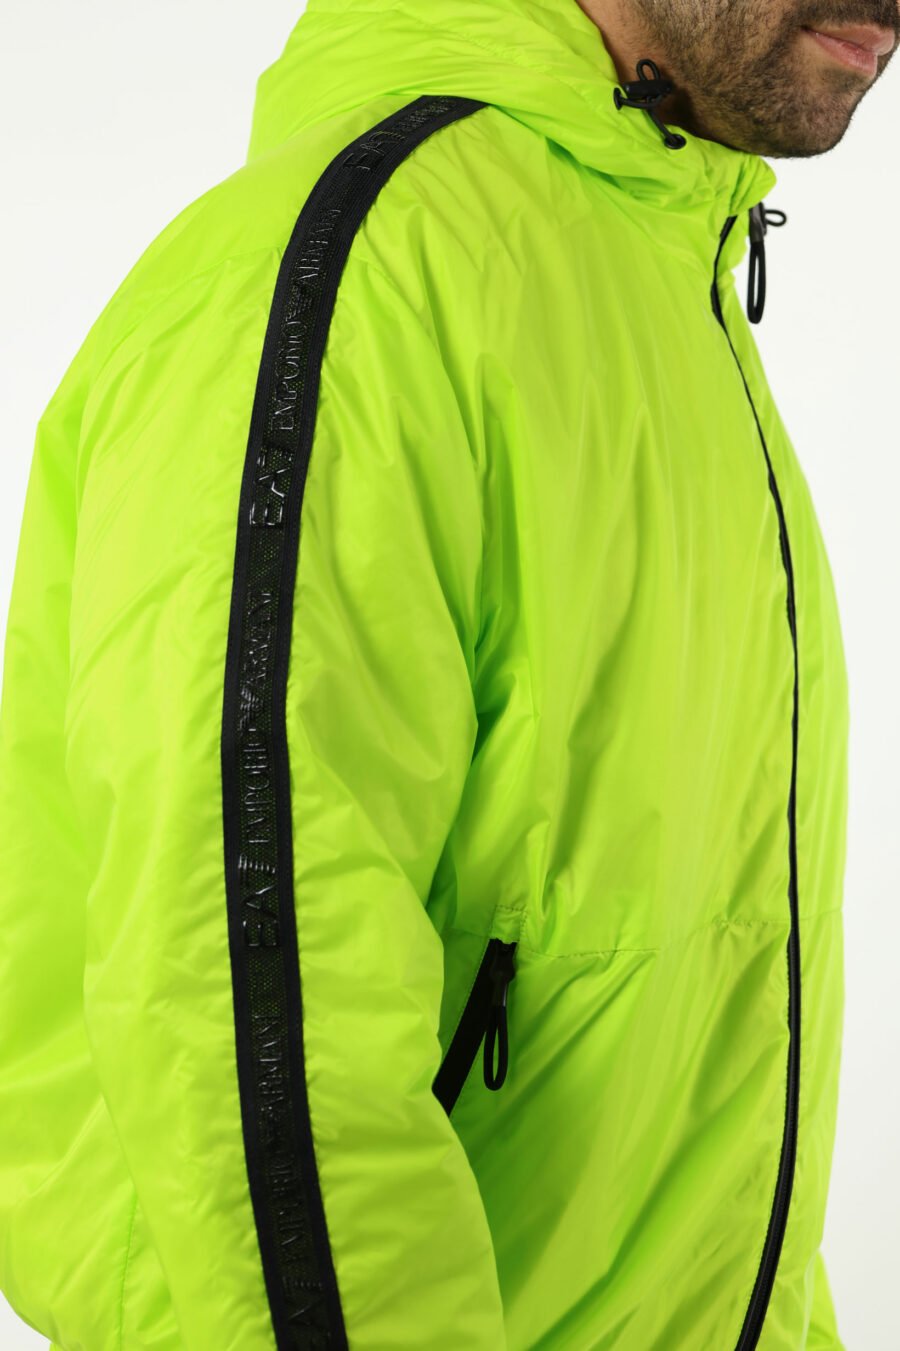 Chaqueta verde lima impermeable con capucha lineas blancas laterales y logo "lux identity" - 110969